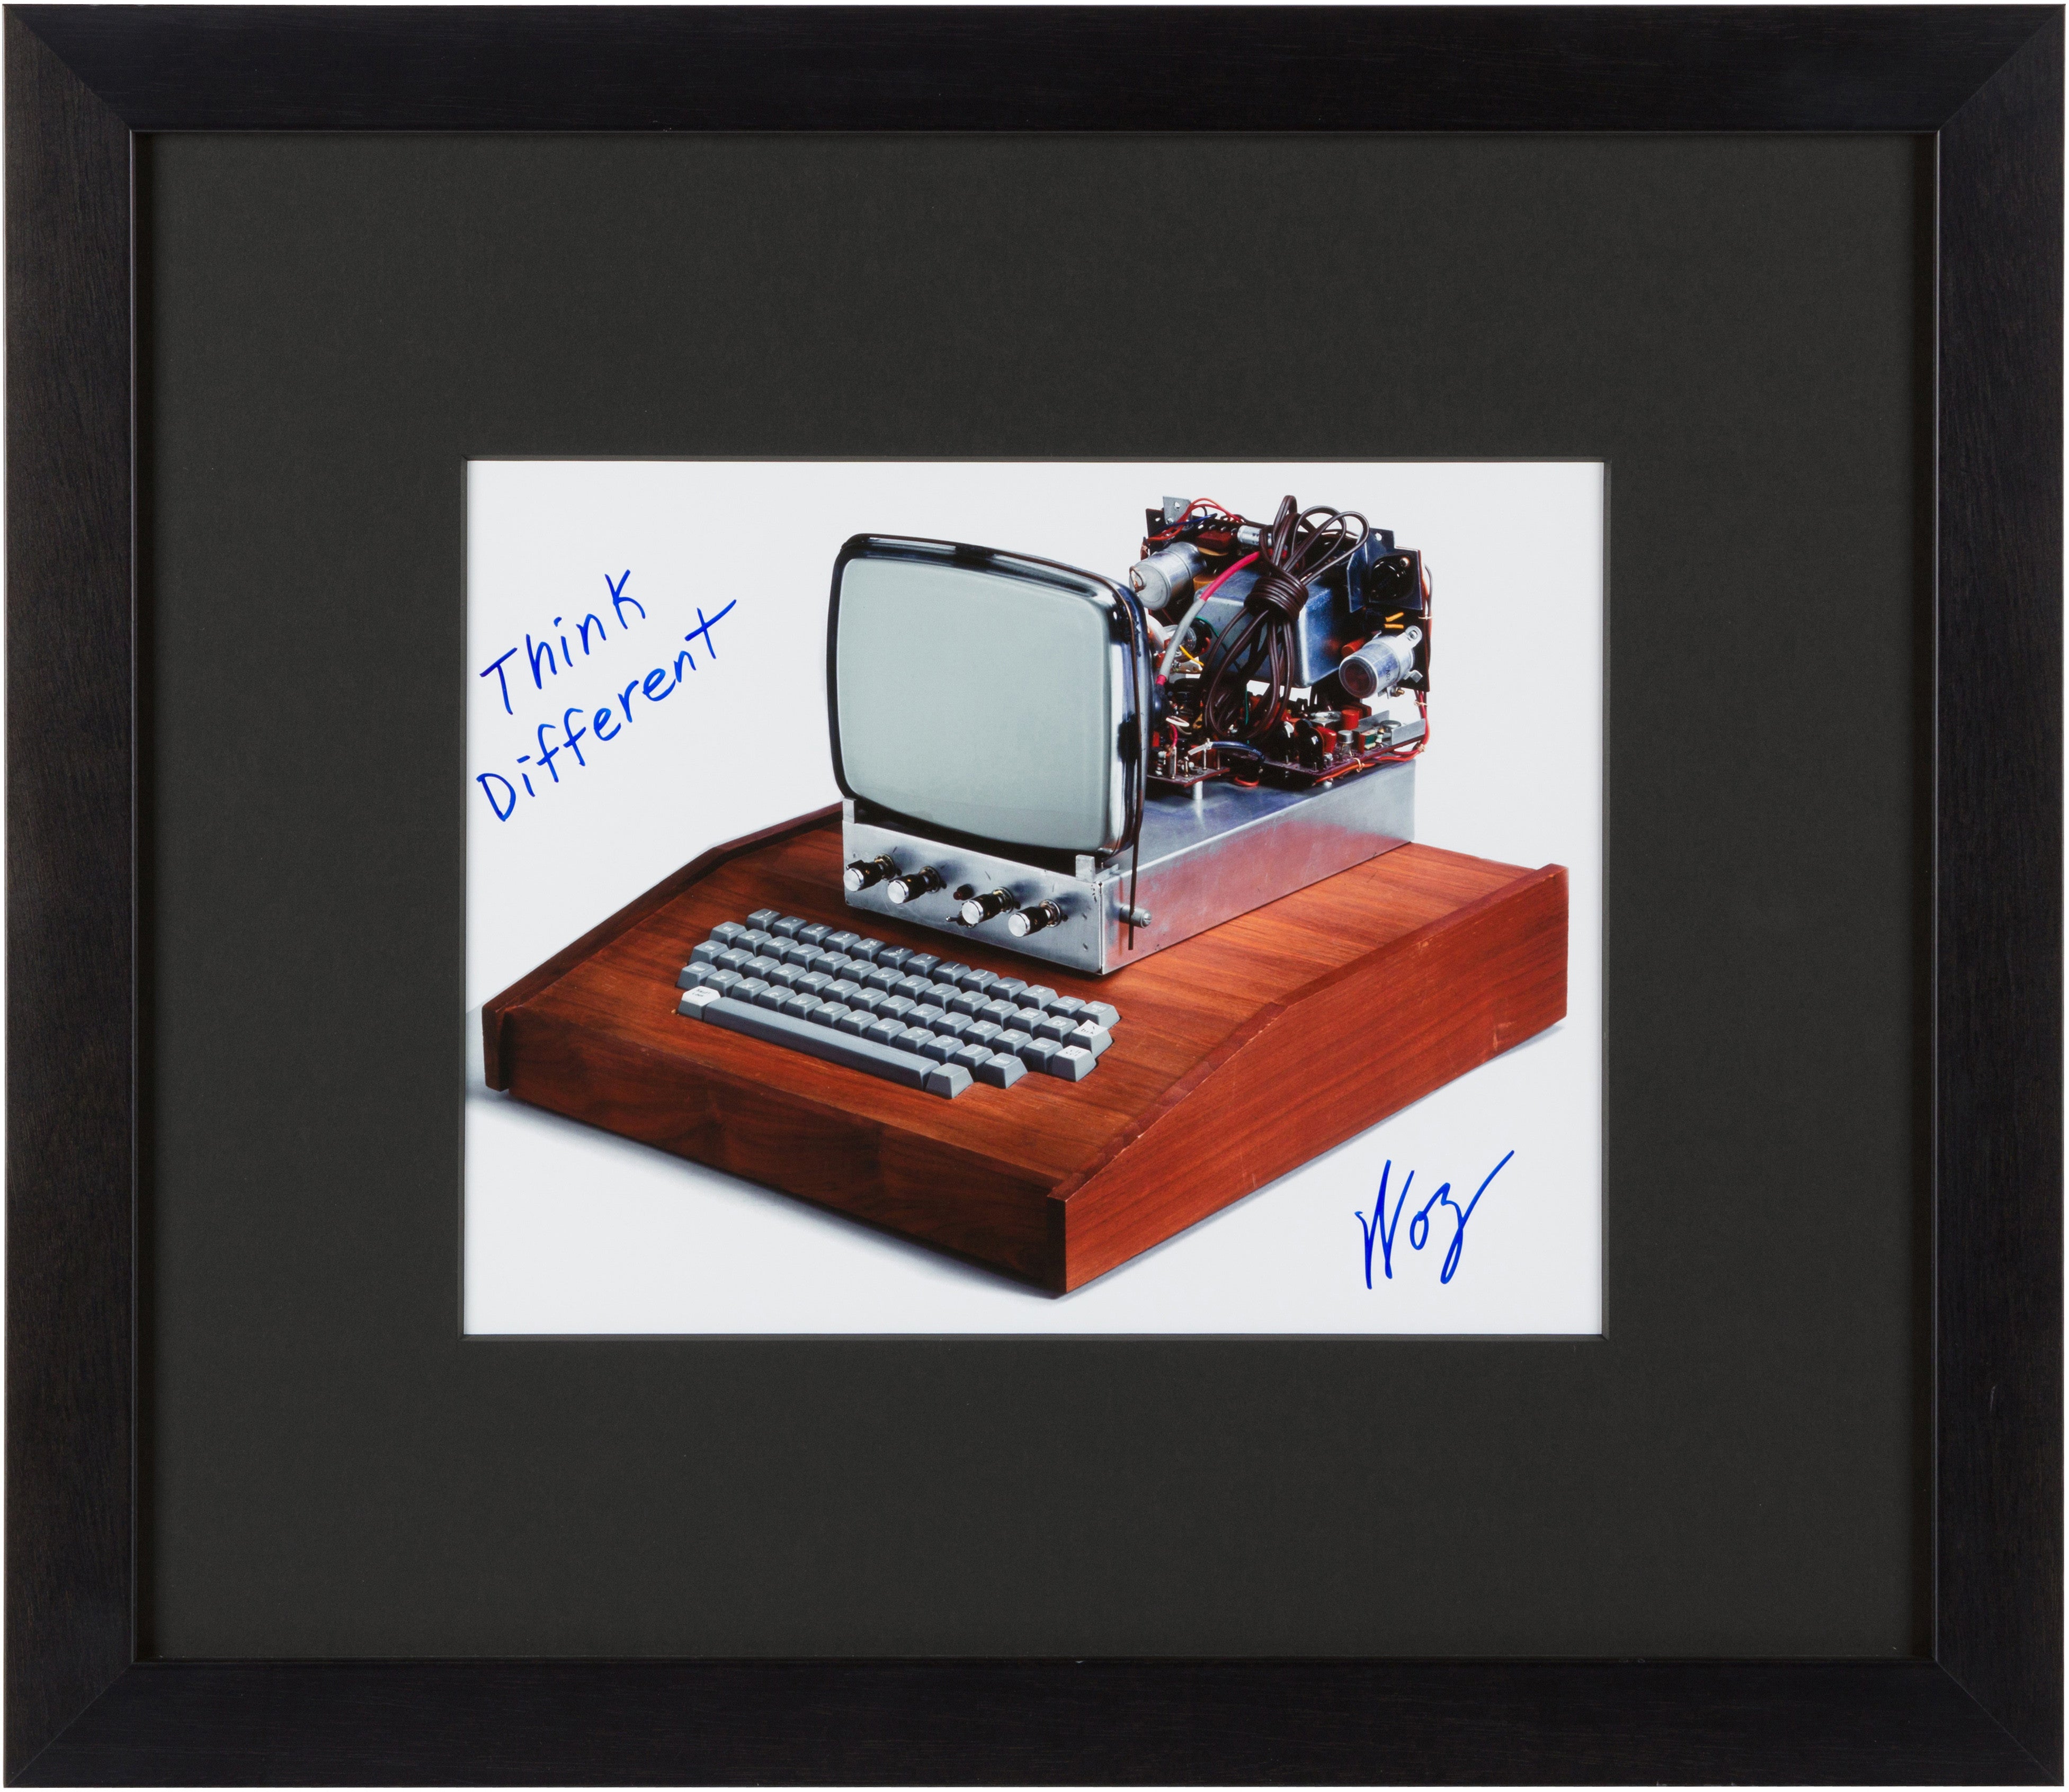 Steve Wozniak Signed Photo: "Think Different"